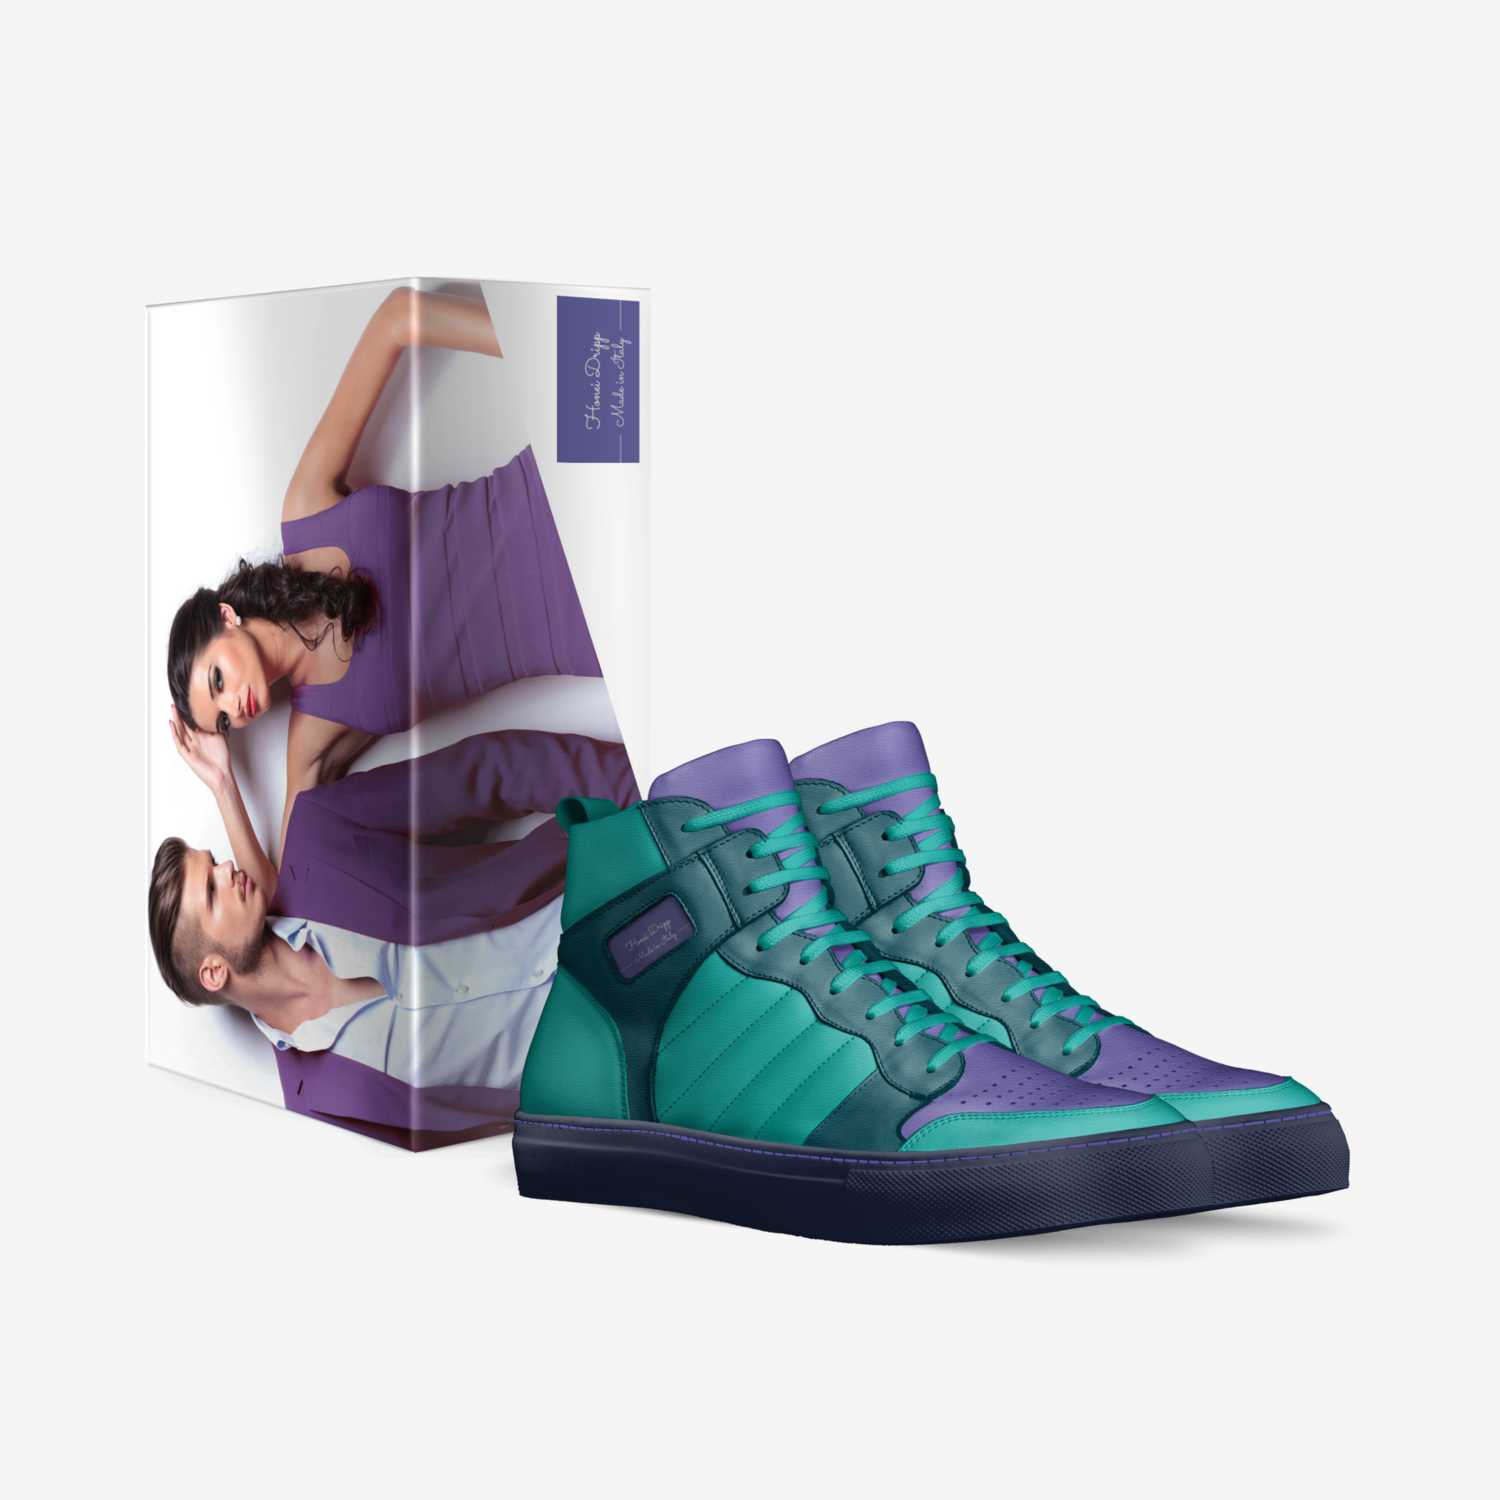 Honei Dripp custom made in Italy shoes by Shasmeen Ismah | Box view